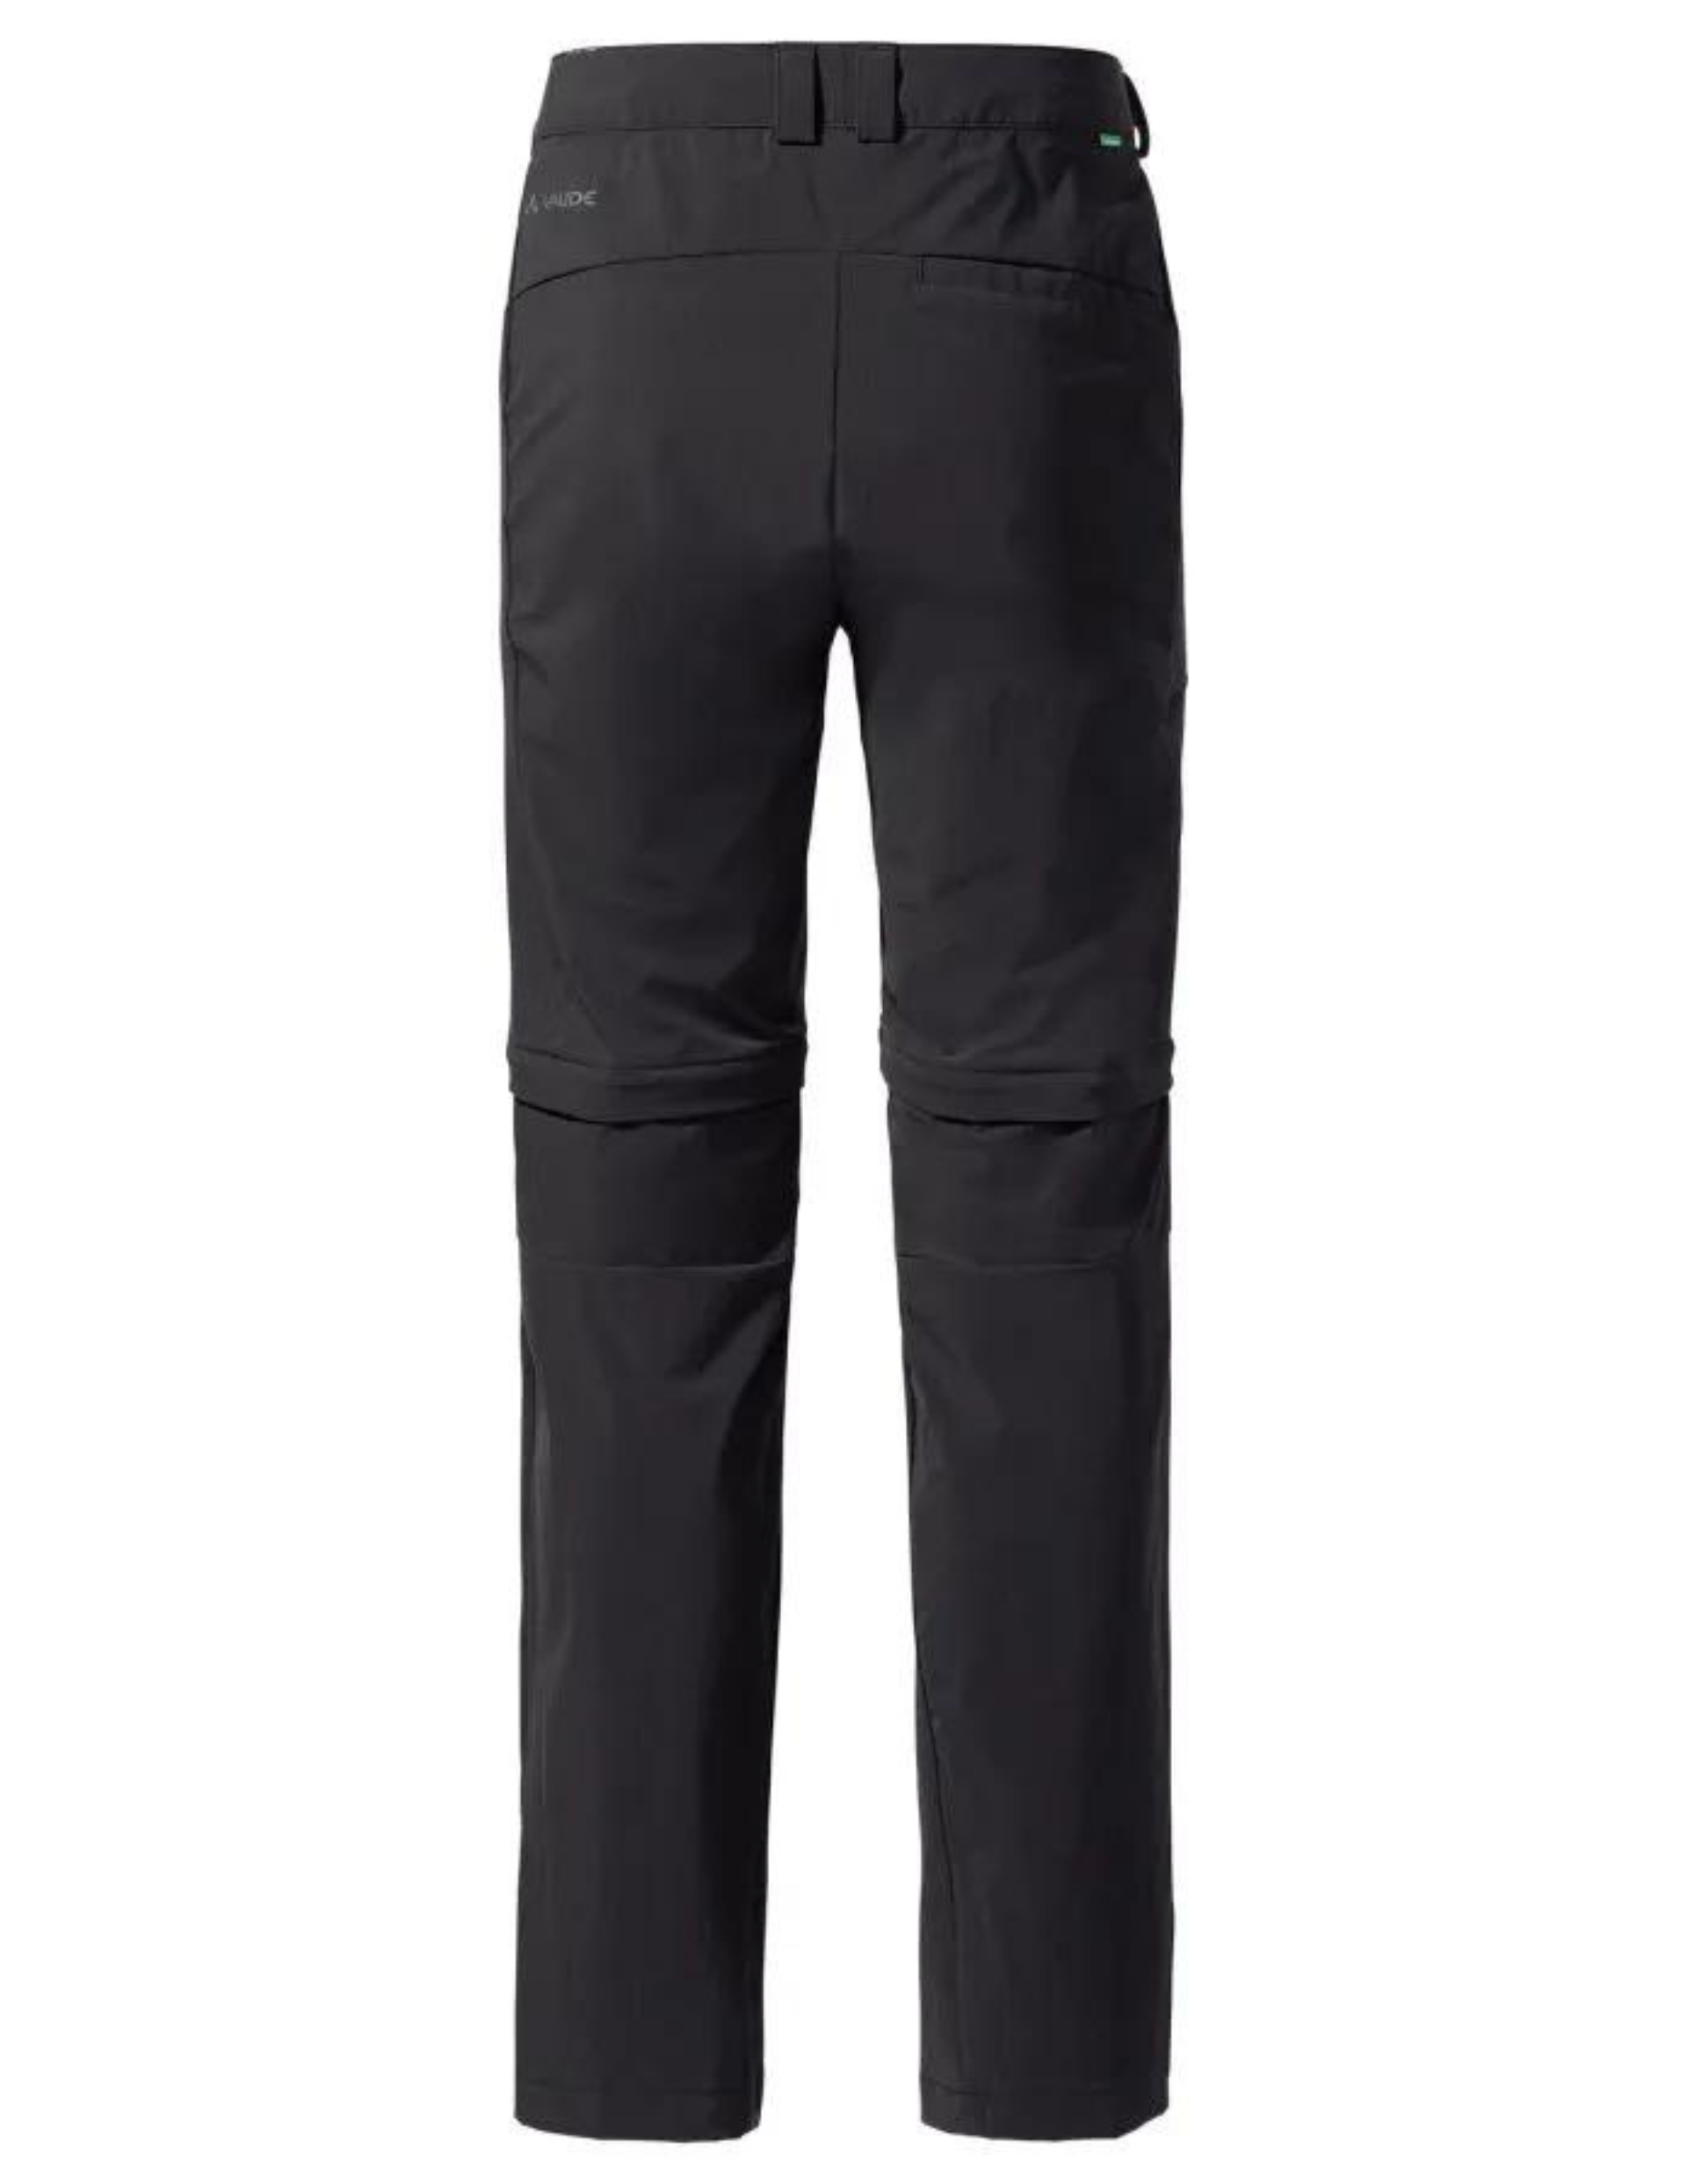 Pantalon - Randonnee - Pantalon STRETCH II homme - noir